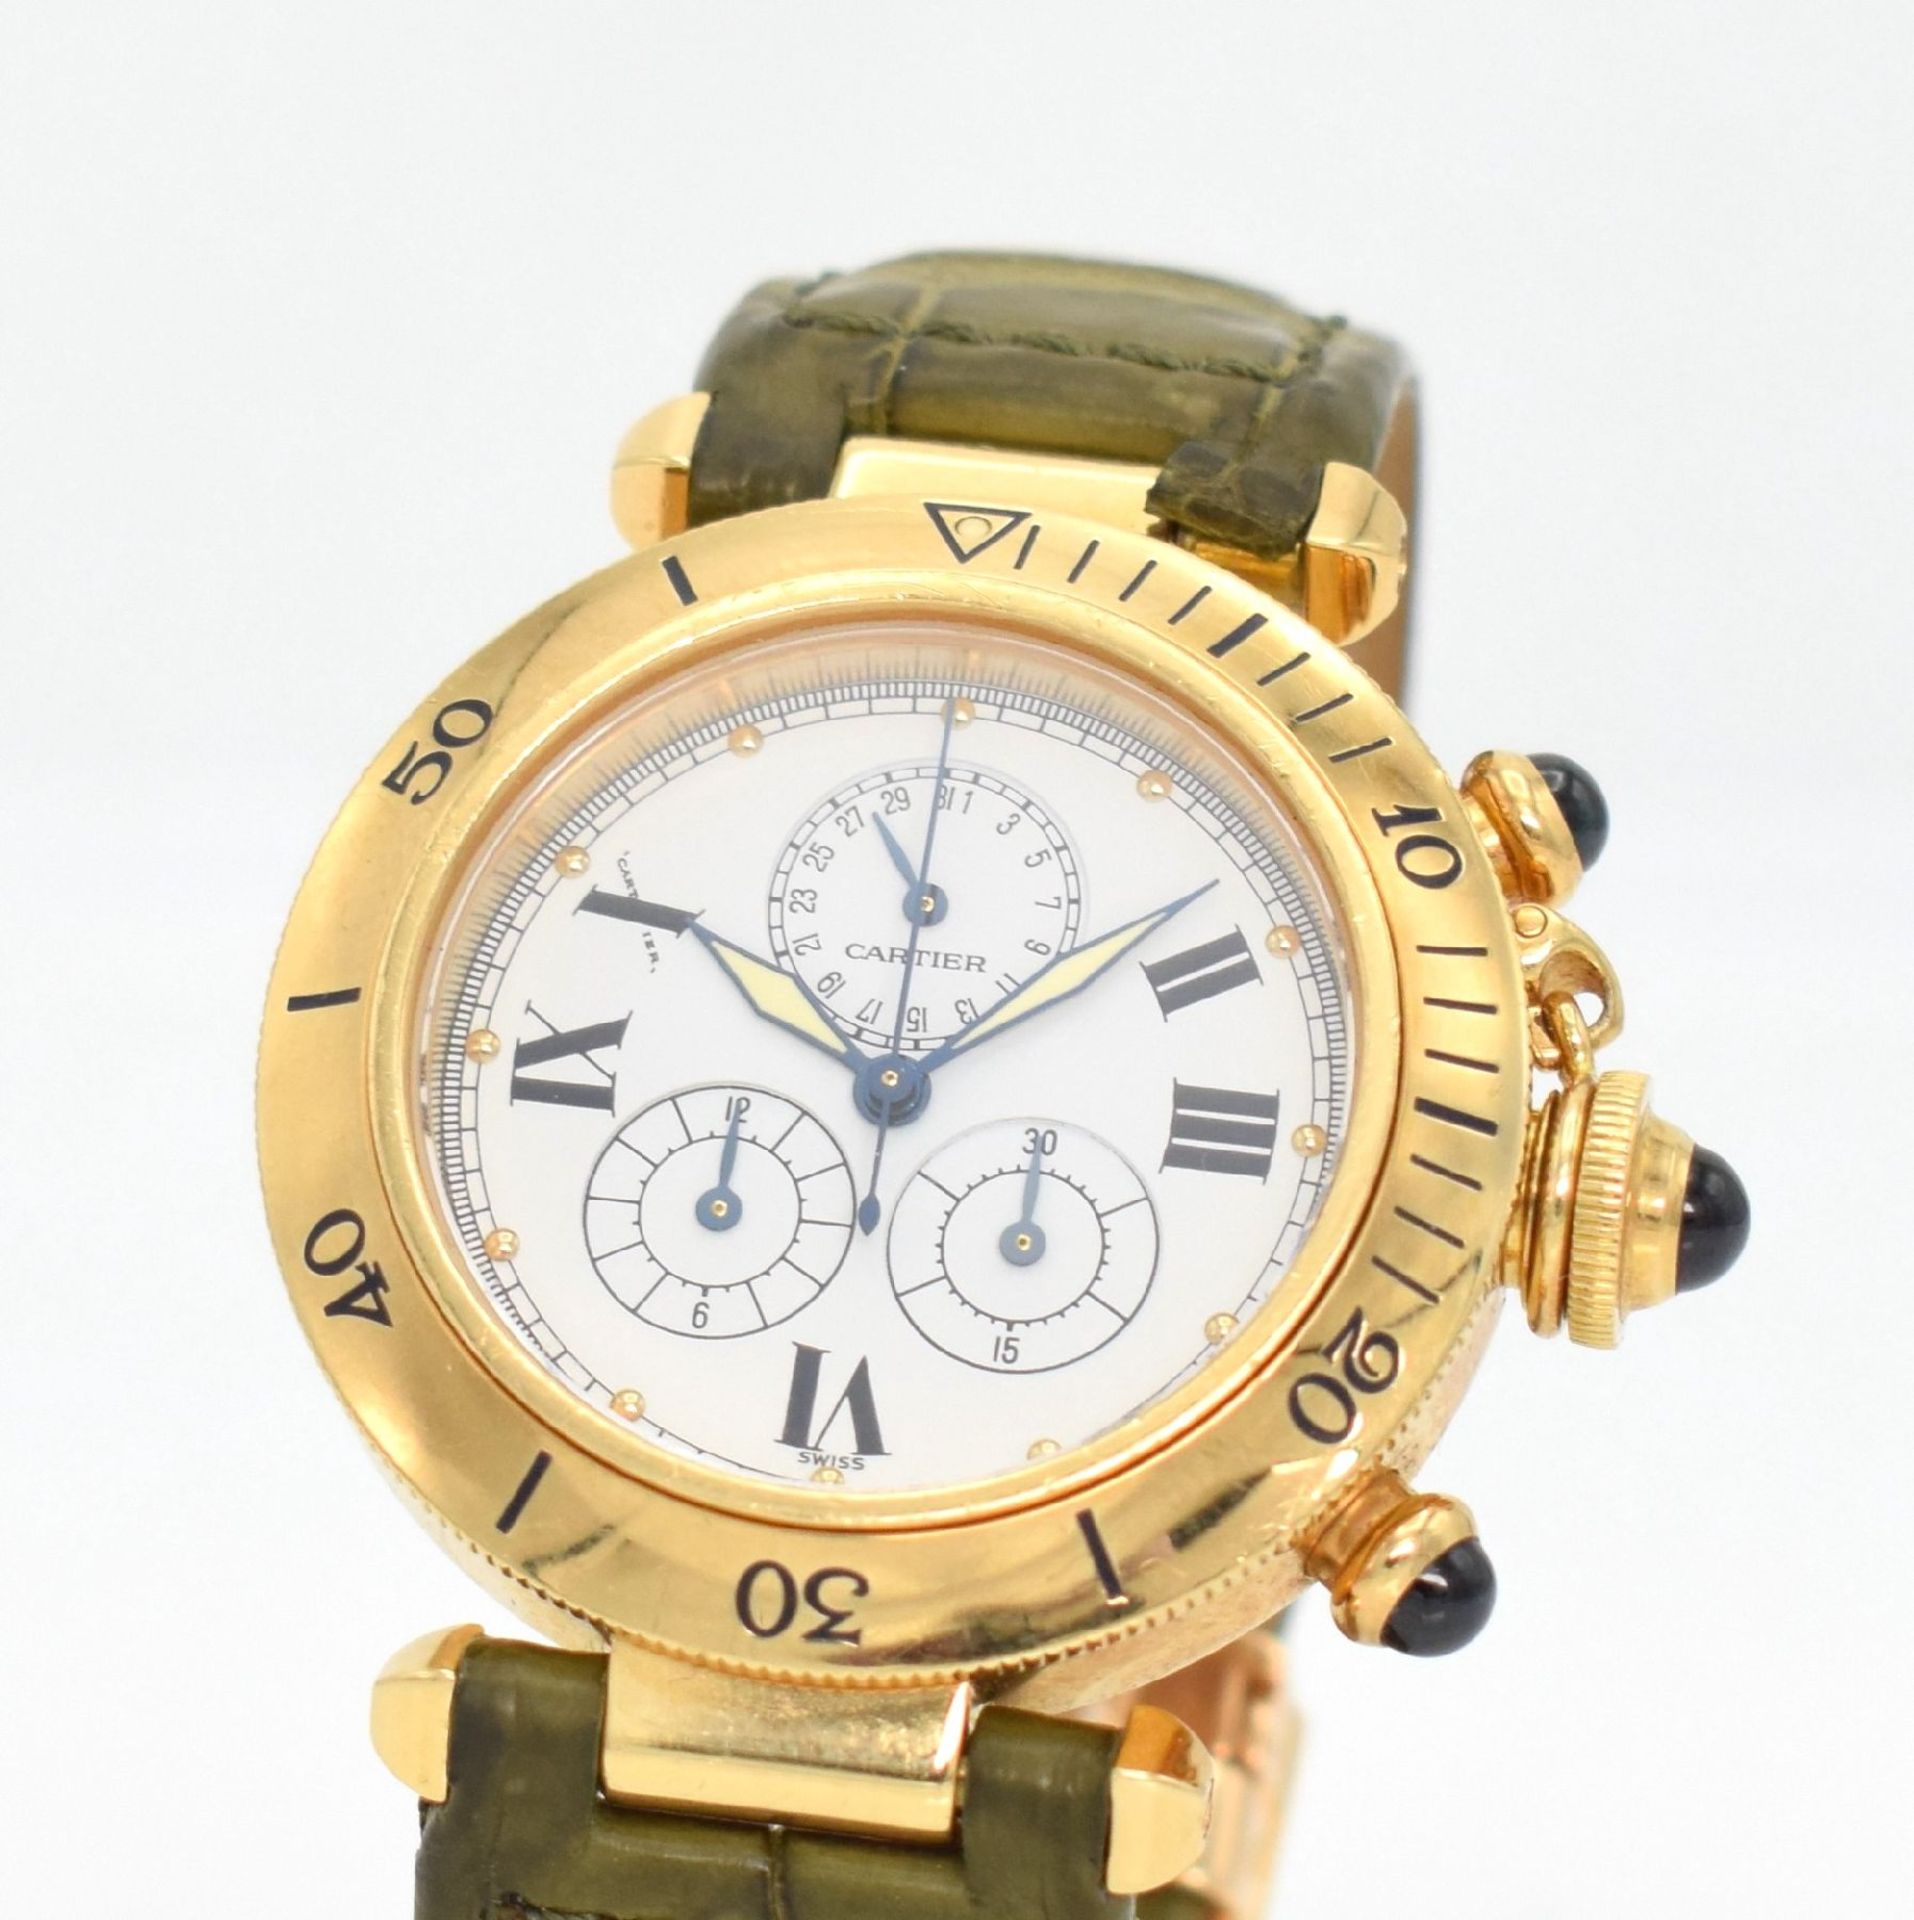 CARTIER Armbandchronograph Serie Pasha in GG 750/000, Schweiz um 2000, Ref. 1353.1, quarz, - Bild 4 aus 9